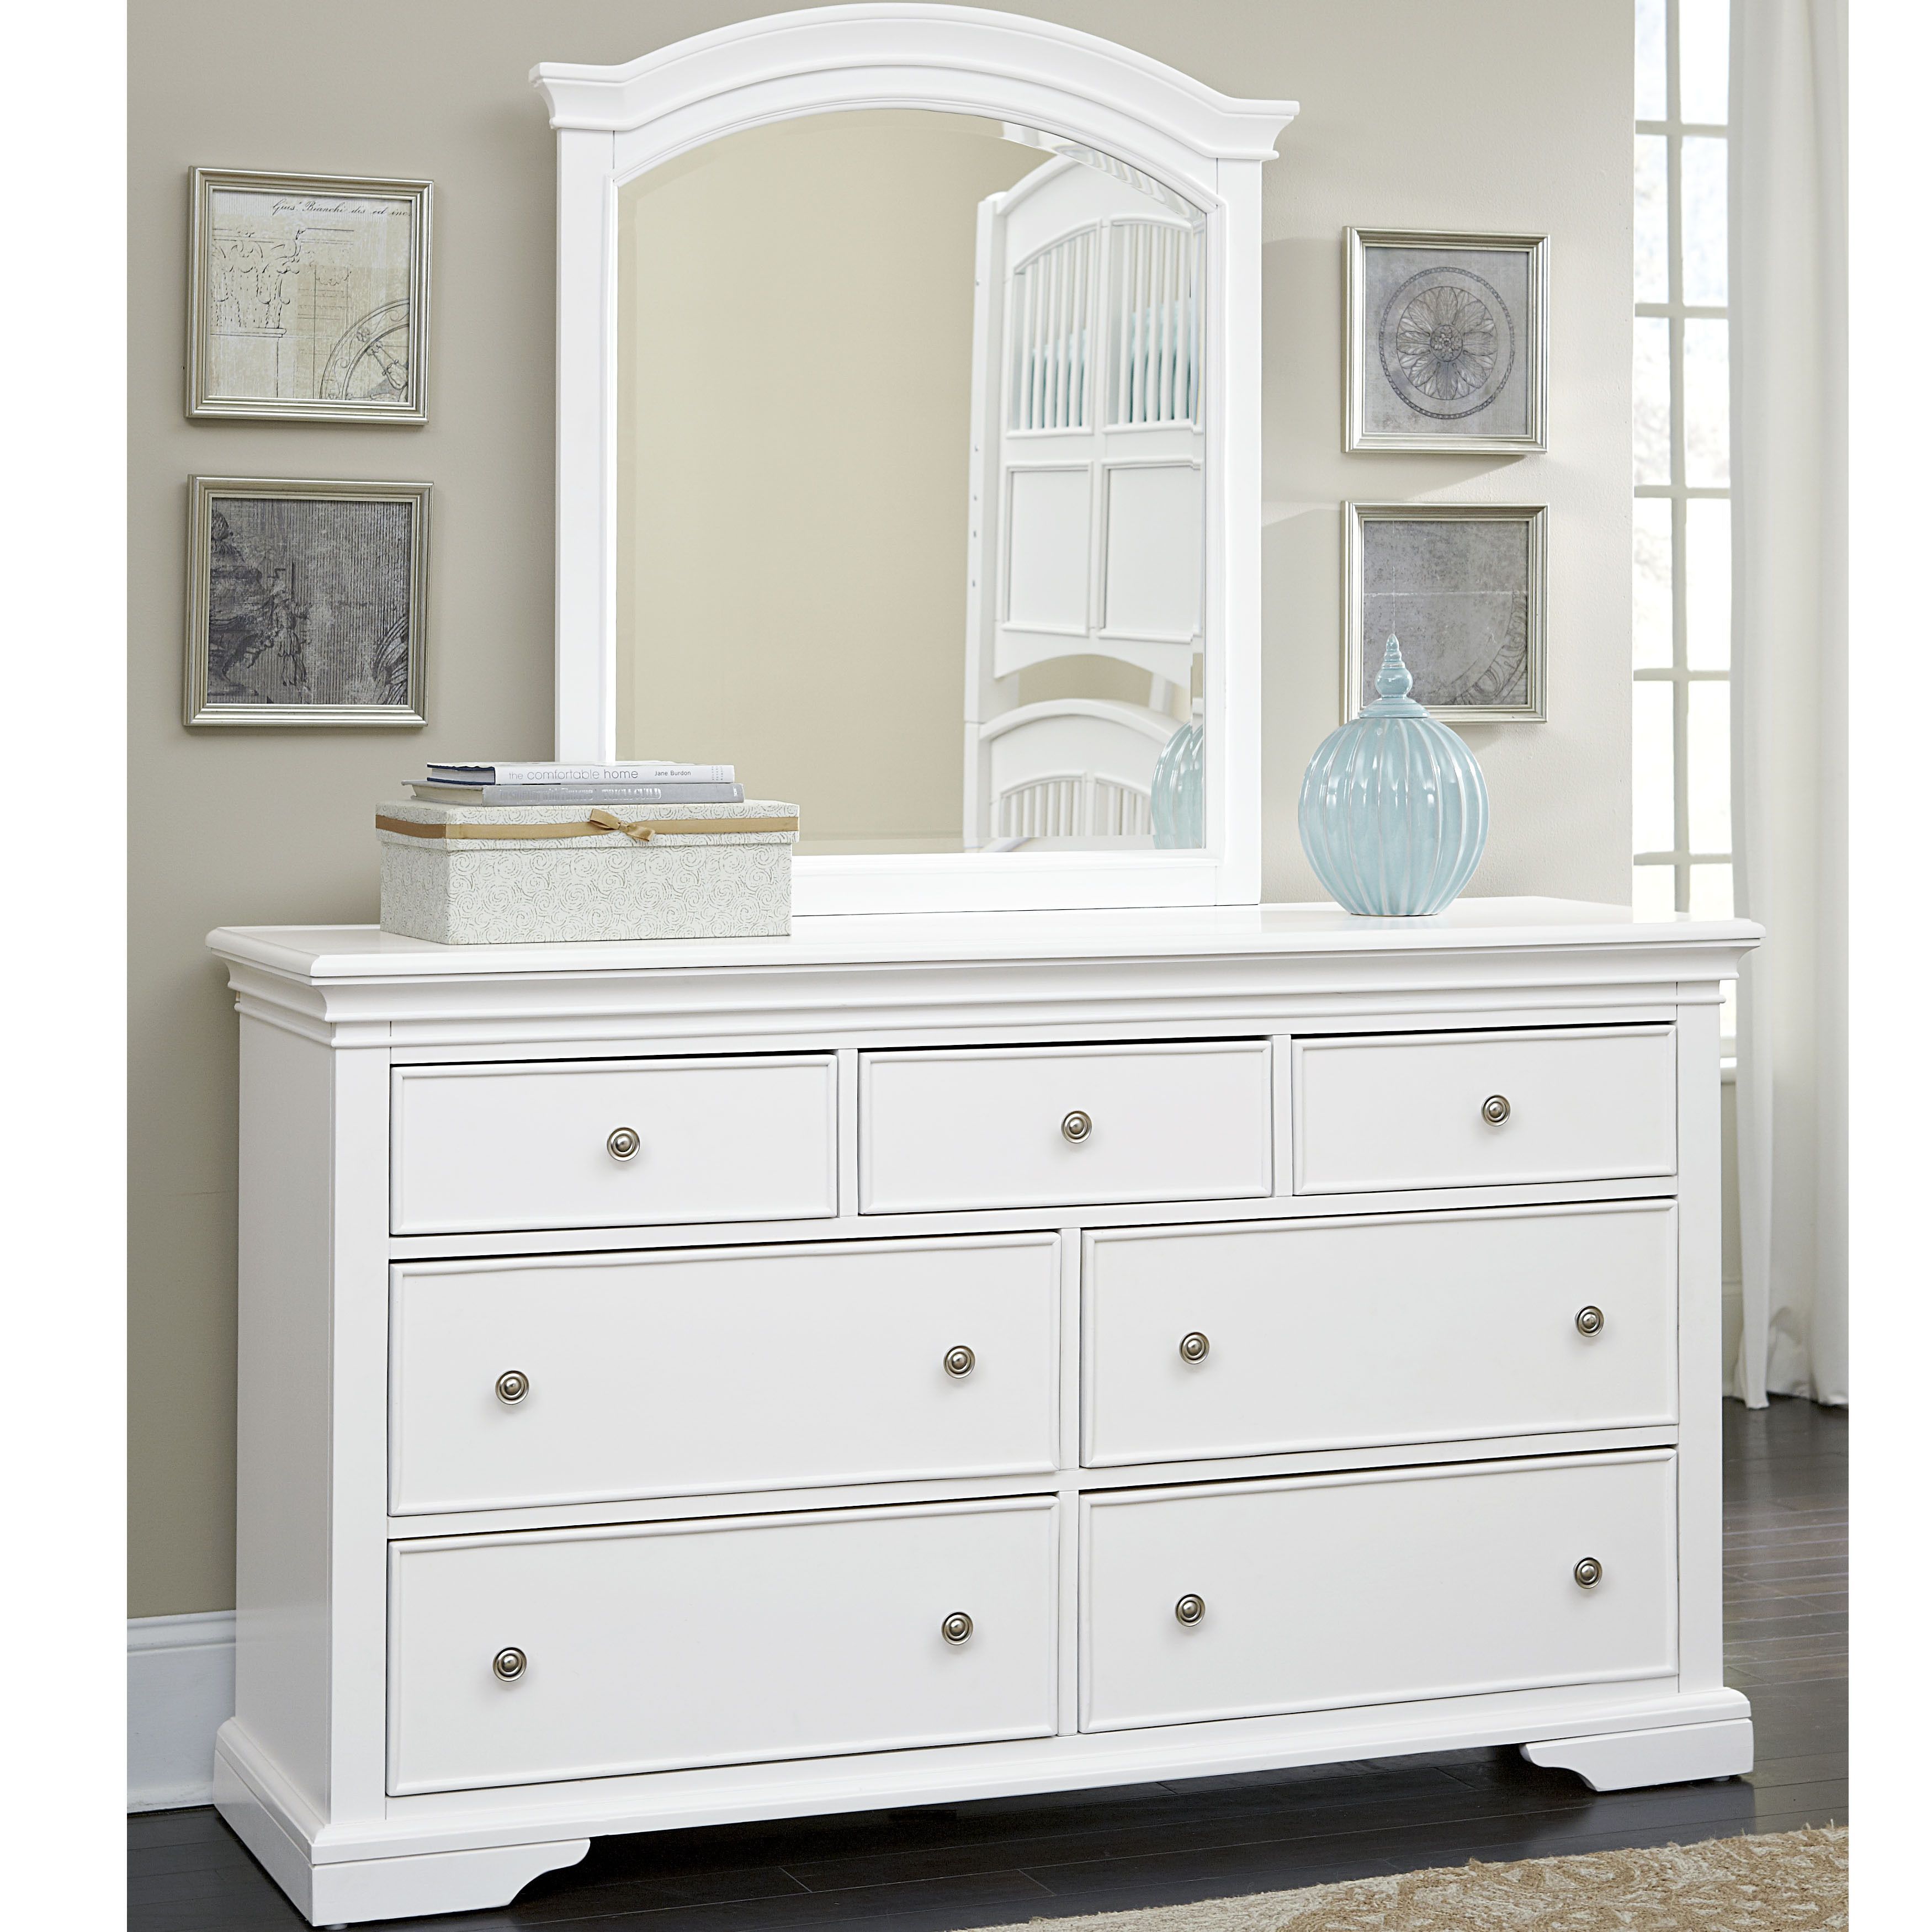 Dresser with mirror nicely mirrored white Dresser 7 with mirror pane SRQGLYA